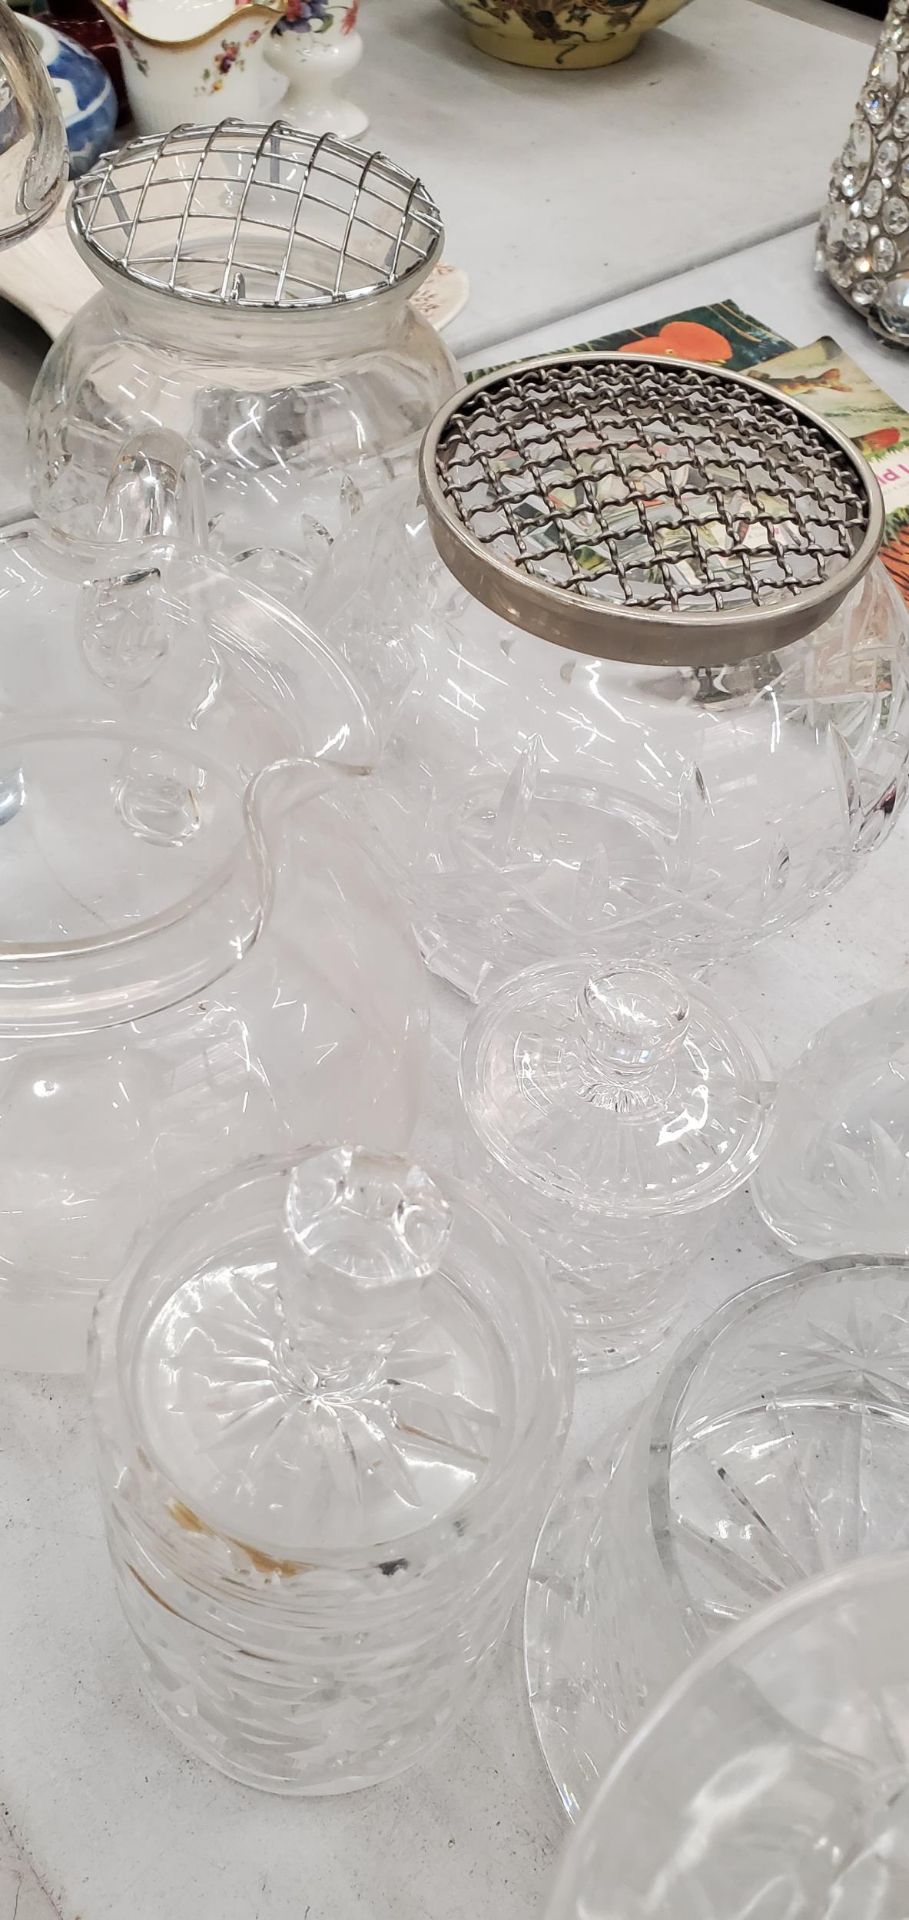 A QUANTITY OF GLASSWARE TO INCLUDE VASES, ROSE BOWLS, STORAGE JARS, DESSERT BOWLS, ETC - Bild 2 aus 2